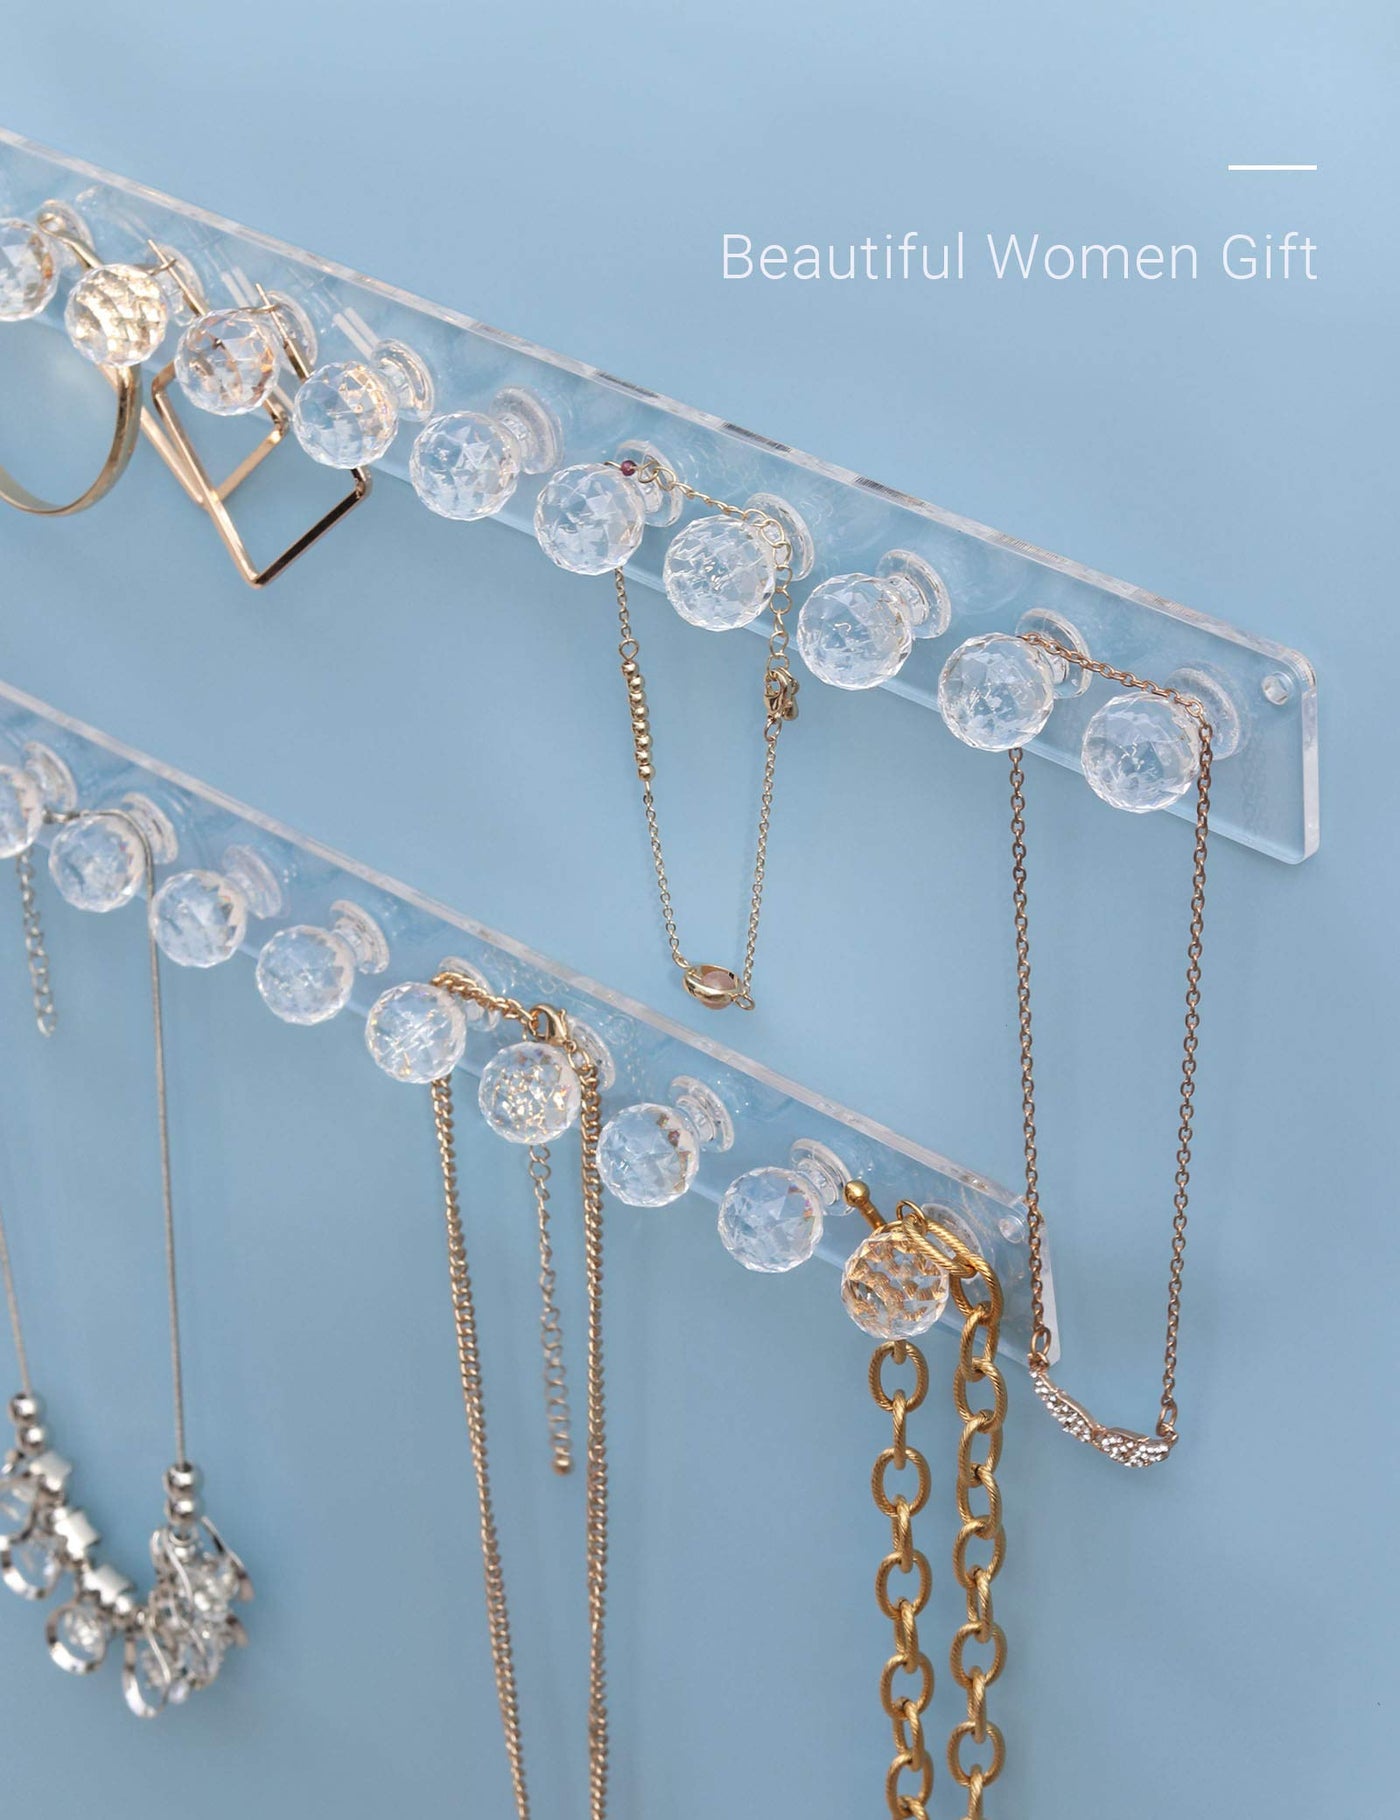 Heesch Necklace Hanger, Acrylic Necklace Organizer Wall Mount